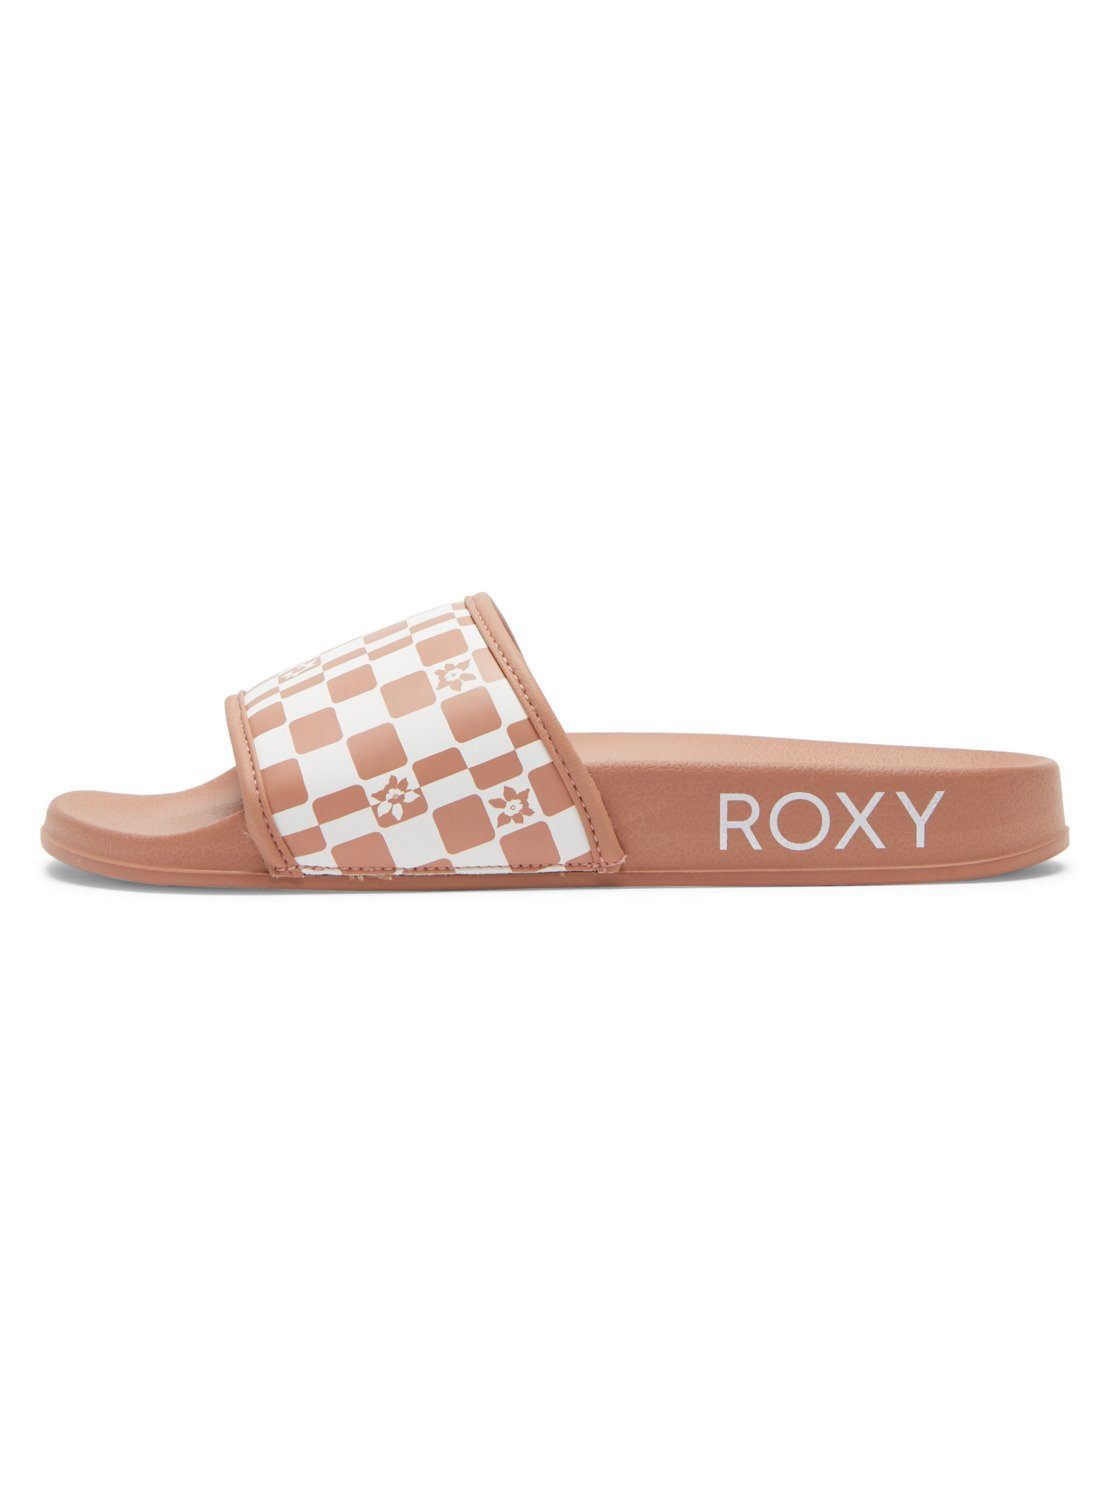 Roxy Sandale White/Tan Slippy